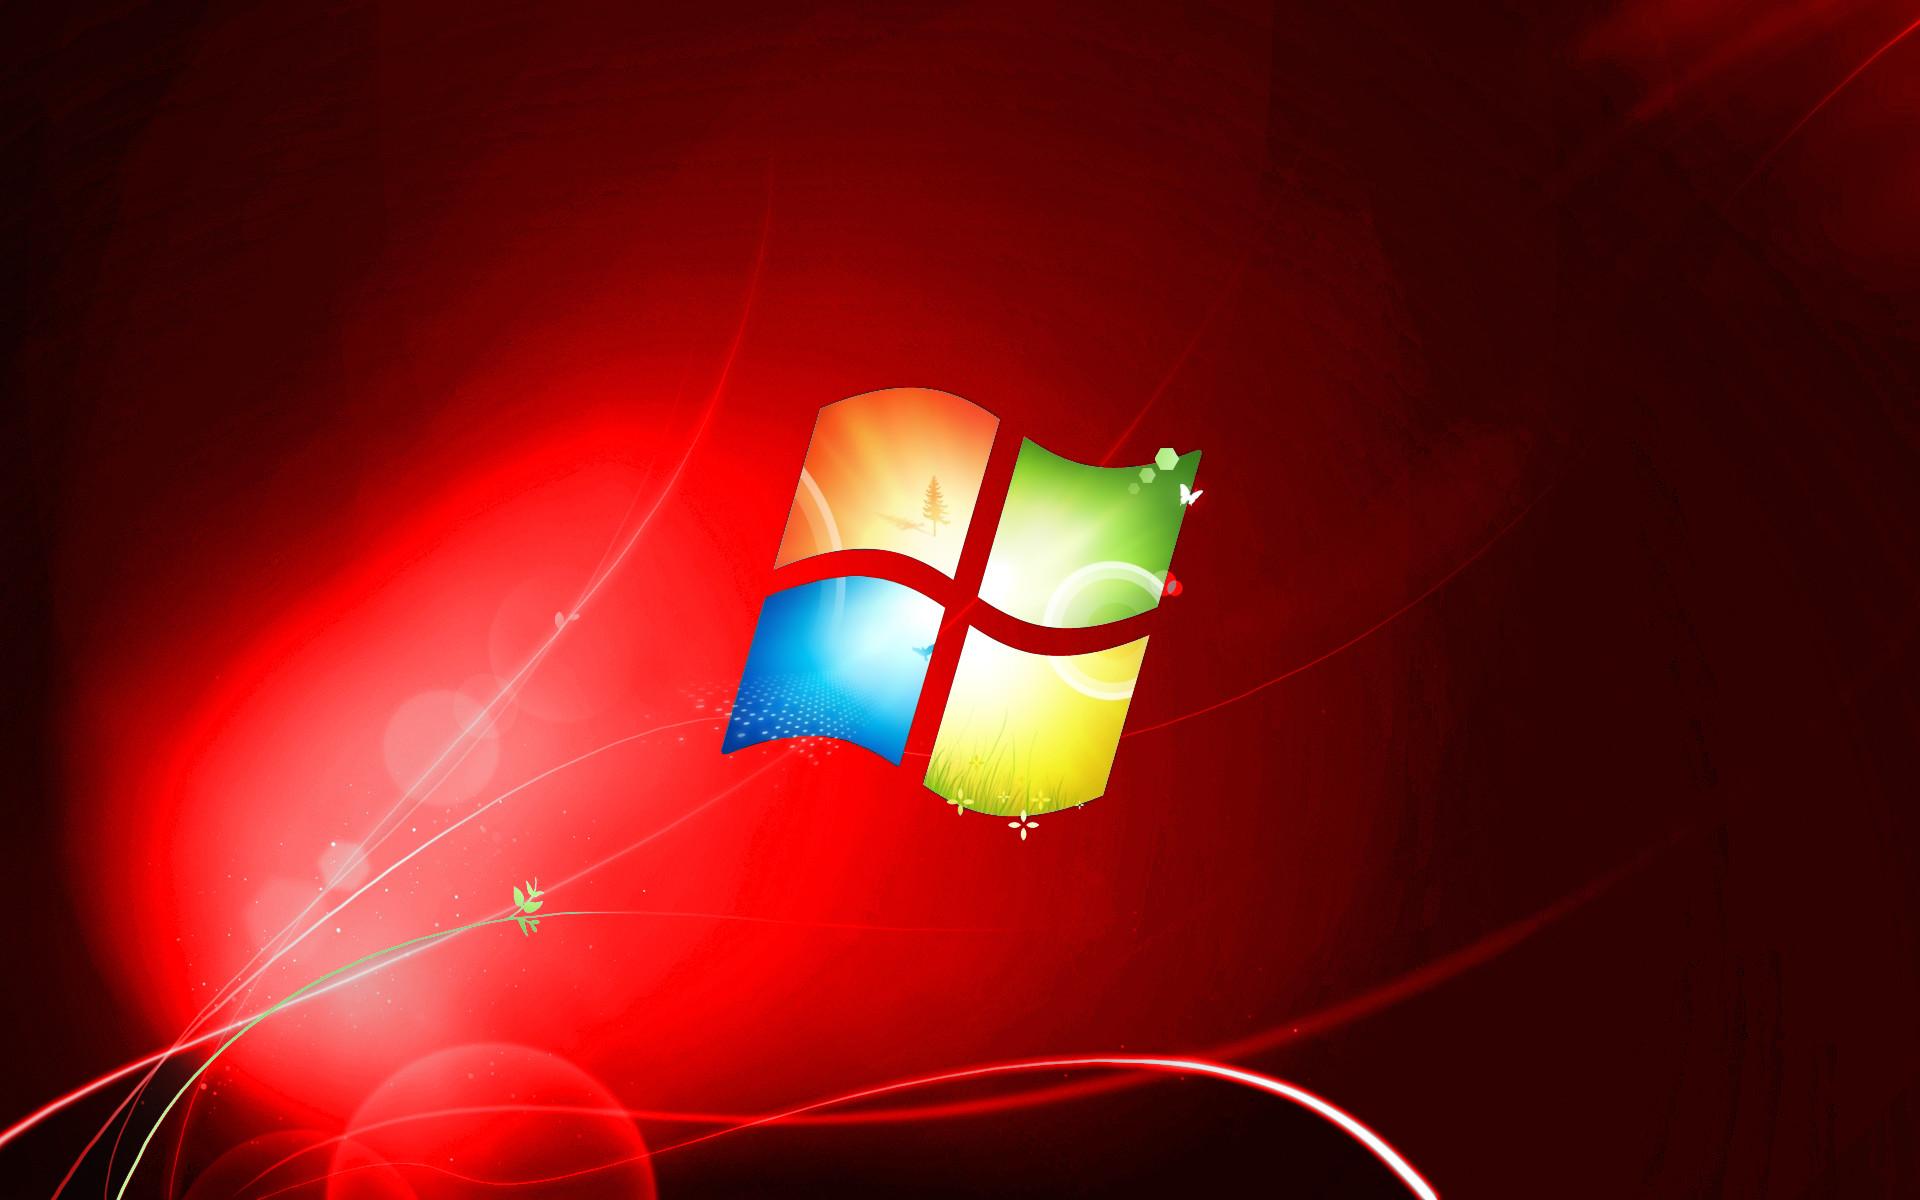 Red Windows 10 Wallpaper HD